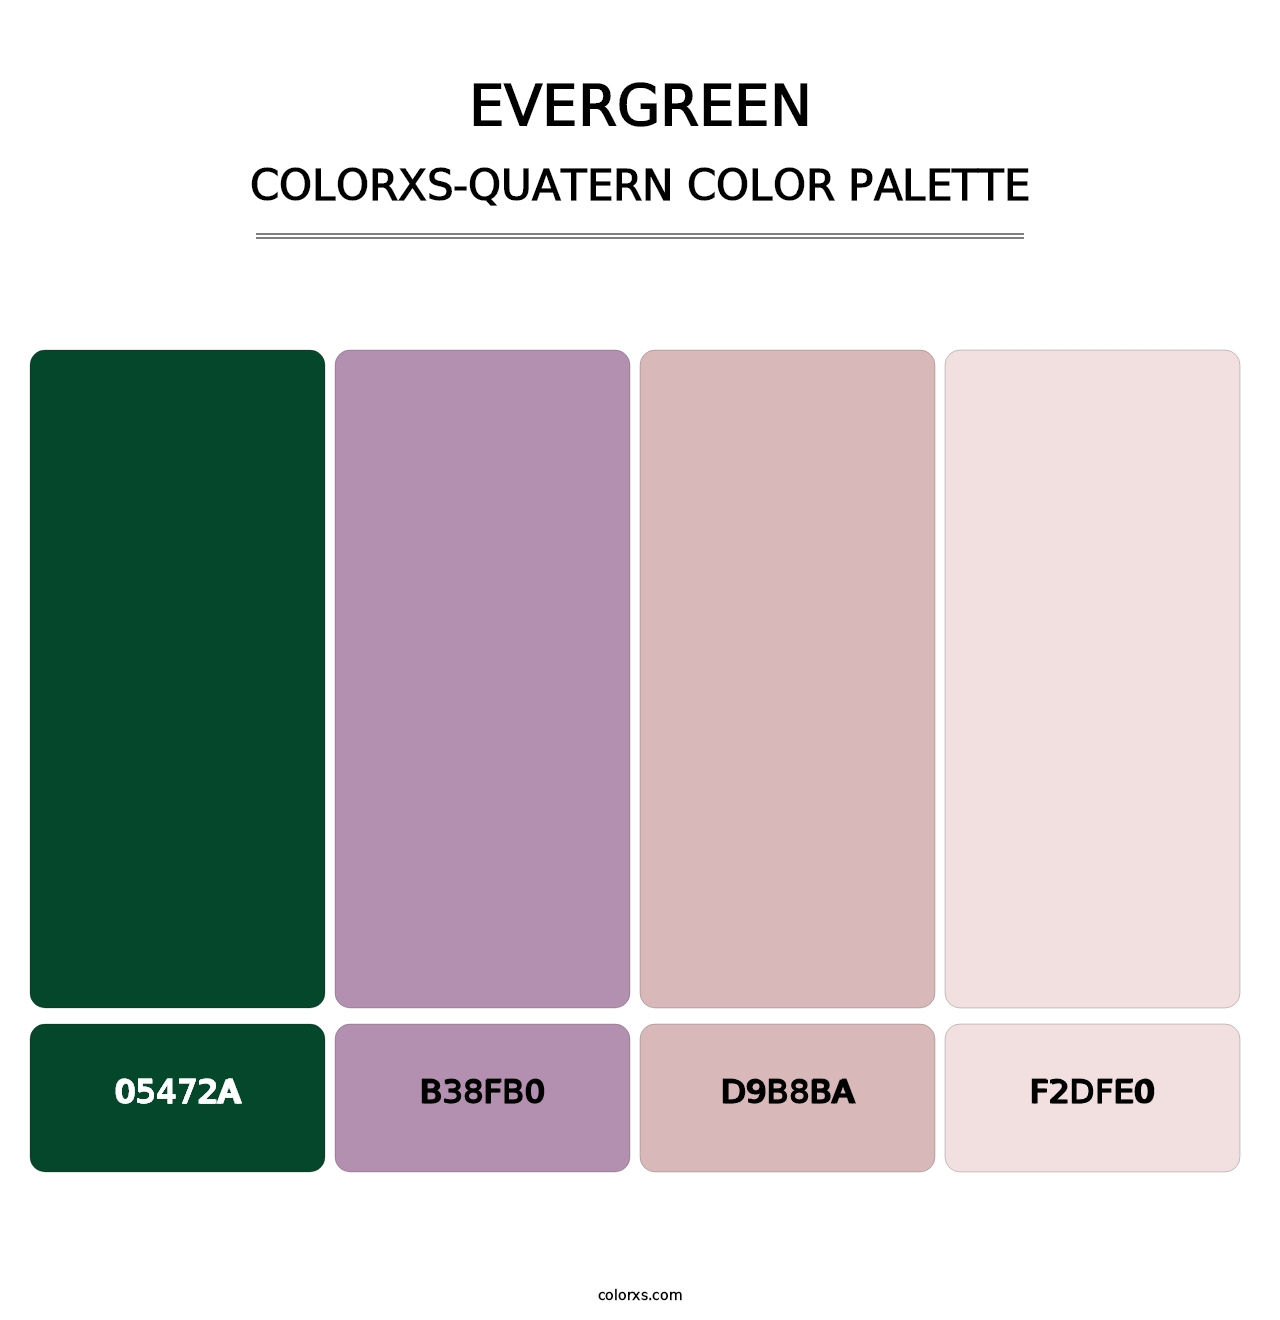 Evergreen - Colorxs Quatern Palette